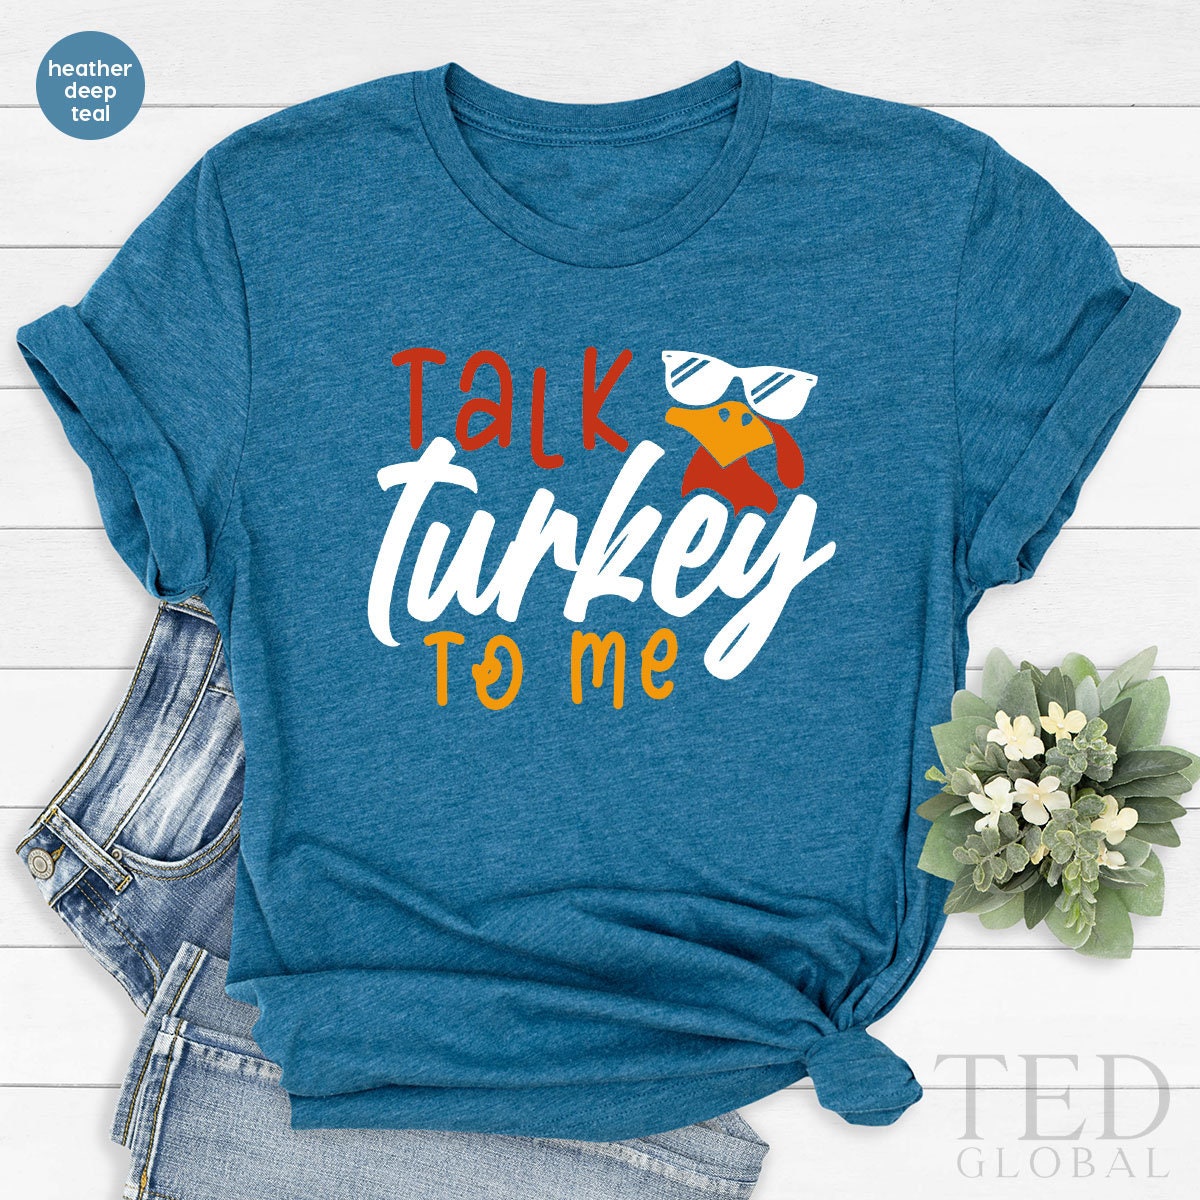 Funny Talk Turkey To Me T-Shirt, Coolest Turkey T Shirt, Family Thanksgiving Fall Shirts, Wine Turkey Family Shirt, Gift For Thanksgiving - Fastdeliverytees.com